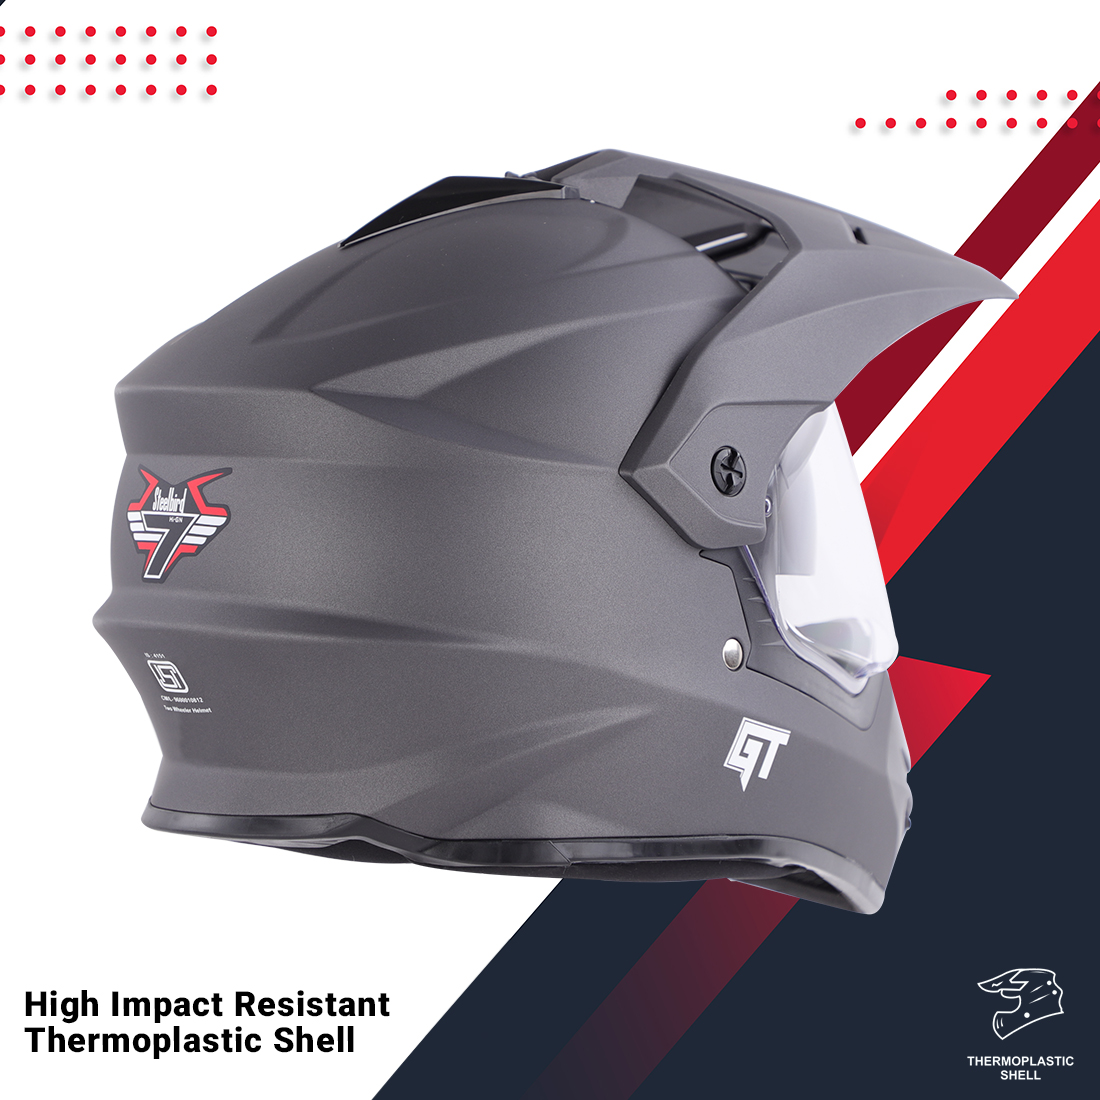 Steelbird Off Road GT ISI Certified Motocross Helmet For Men With Inner Sun Shield (Matt Axis Grey With Clear Visor)